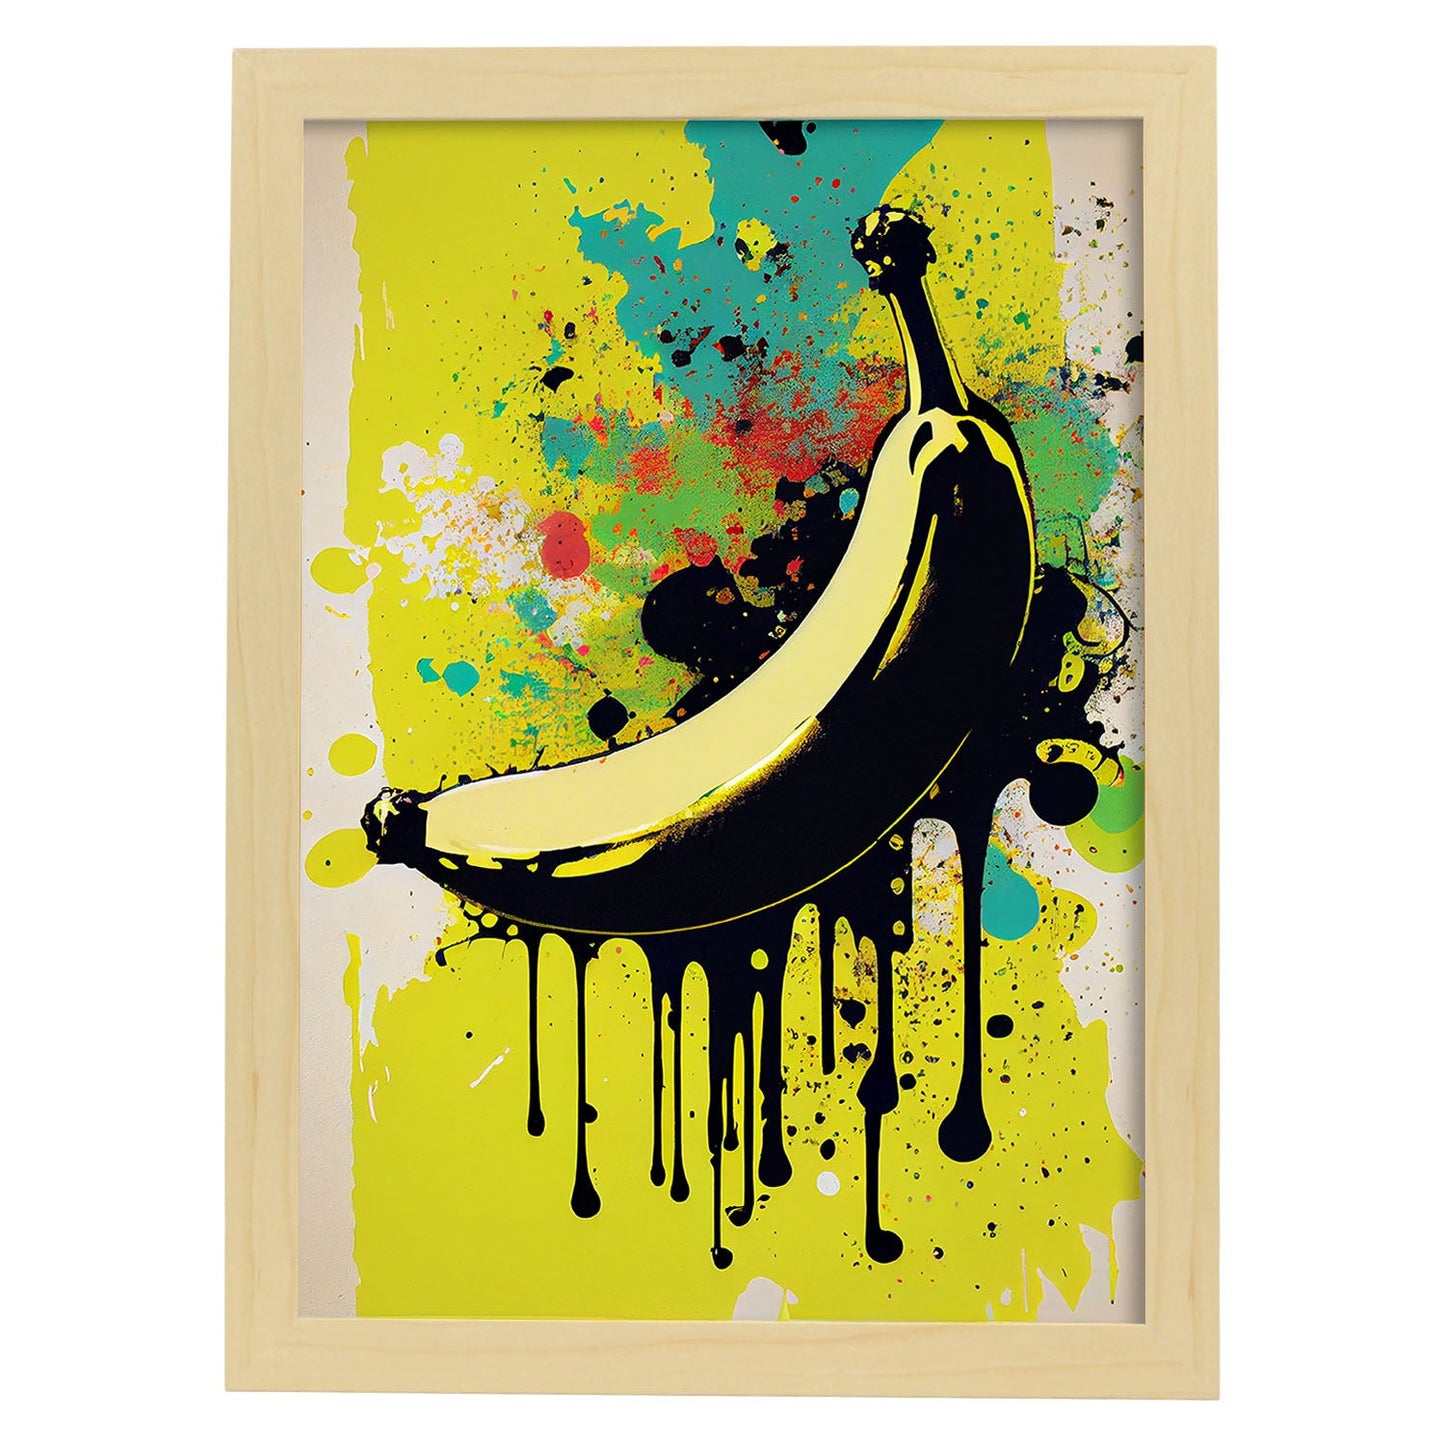 Nacnic banana Pop Art_2. Aesthetic Wall Art Prints for Bedroom or Living Room Design.